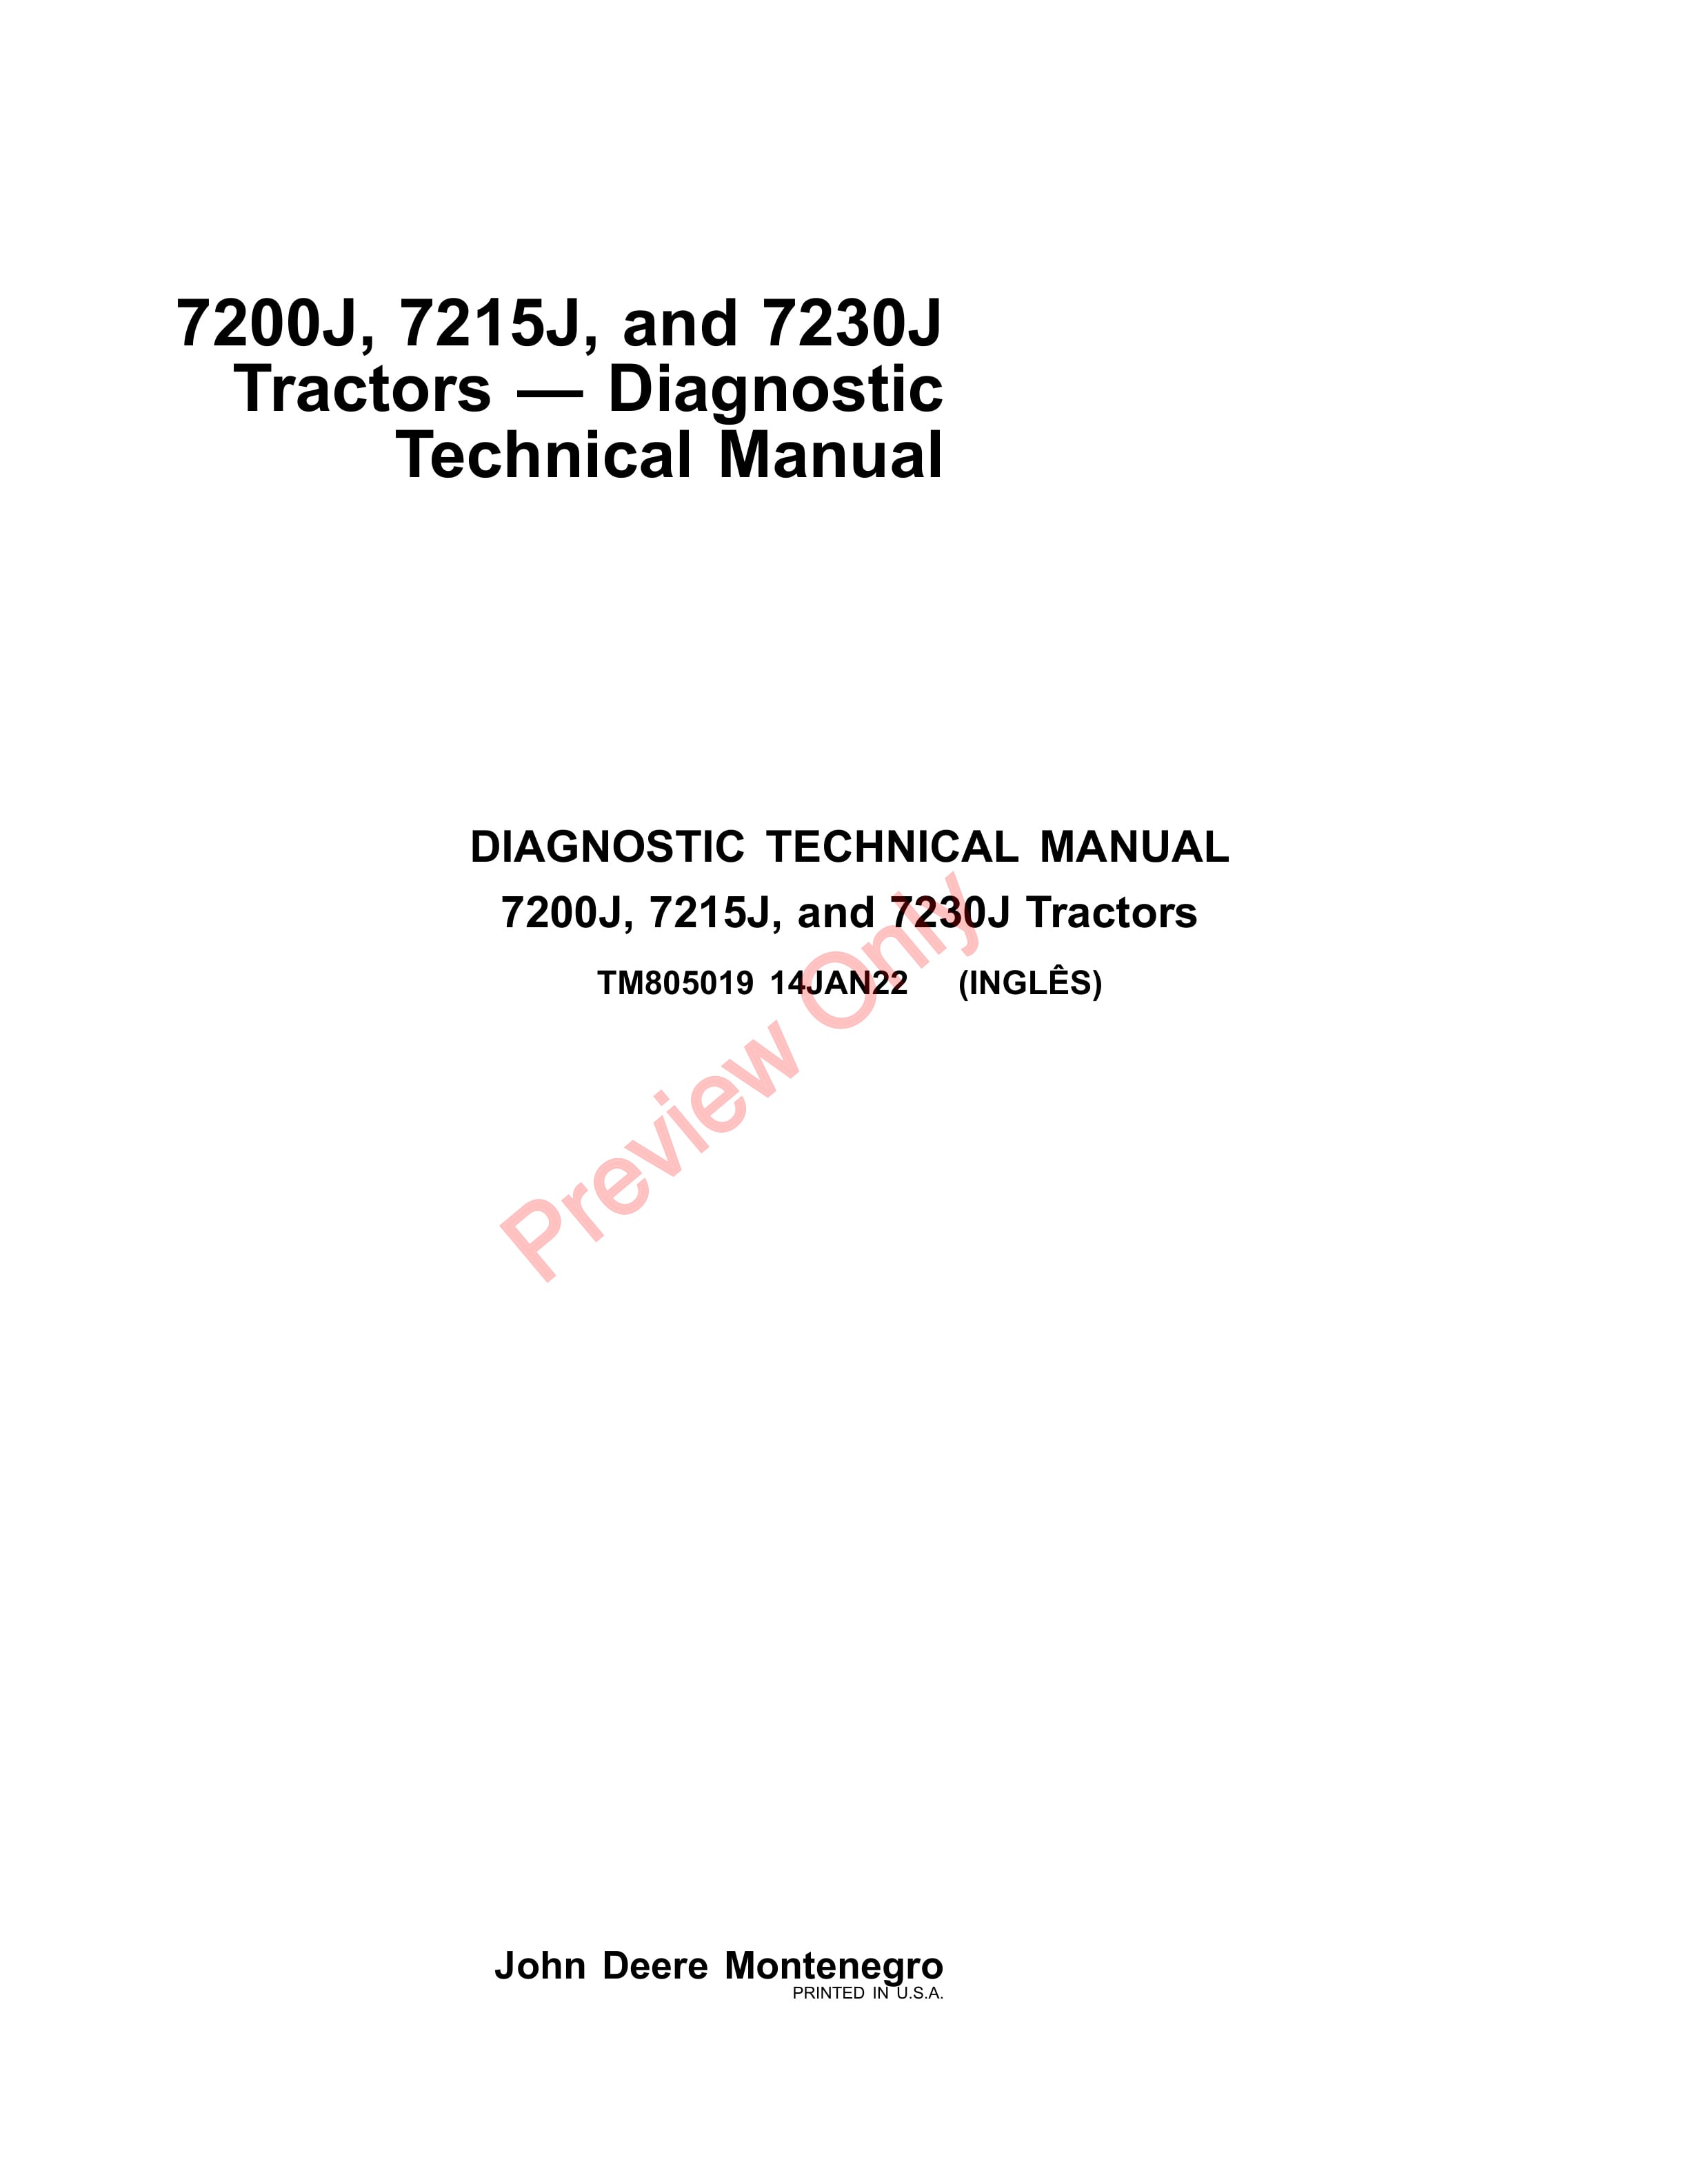 John Deere 7200J 7215J and 7230J Tractors Diagnostic Technical Manual TM805019 14JAN22 1